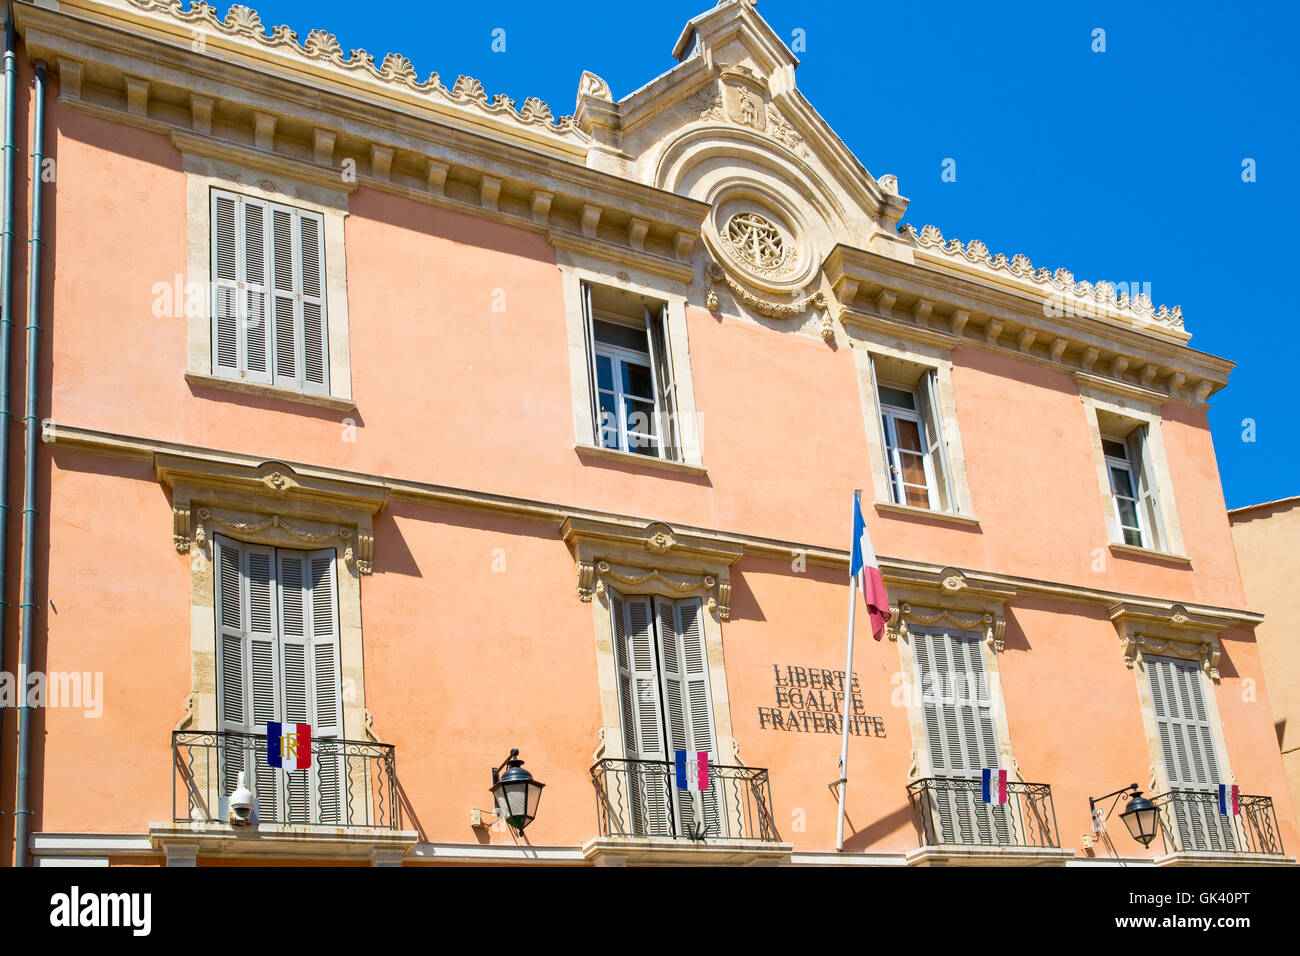 Town hall of Saint Tropez, France Stock Photo